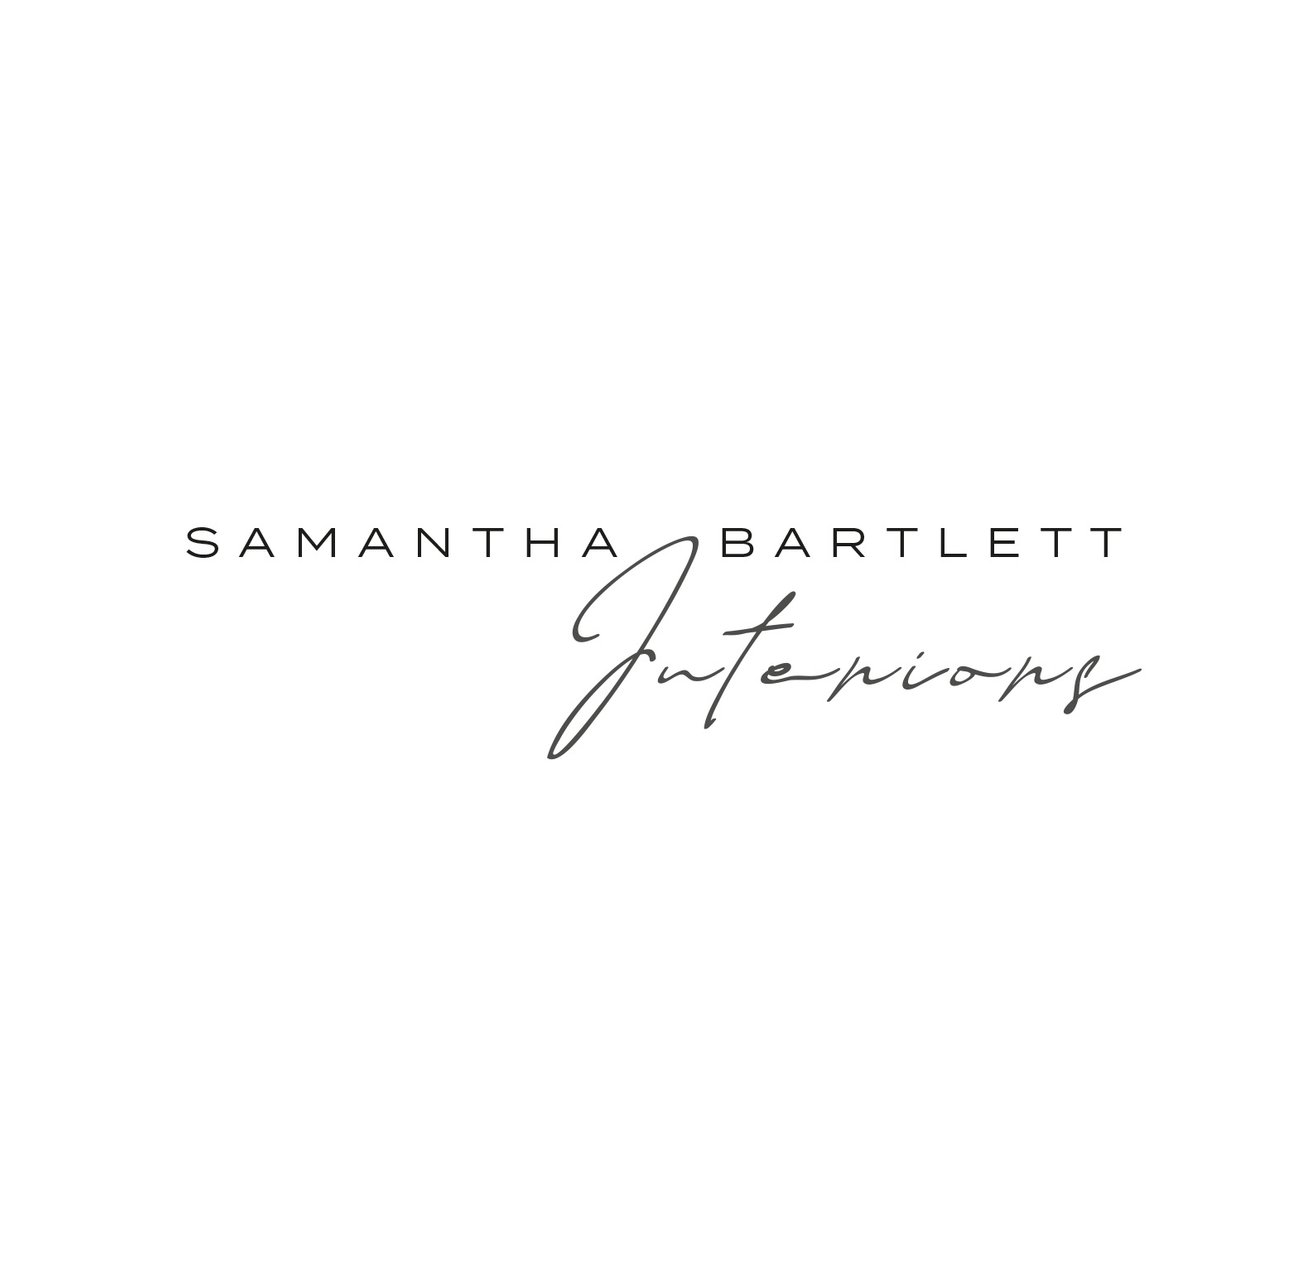 www.samanthabartlett.com